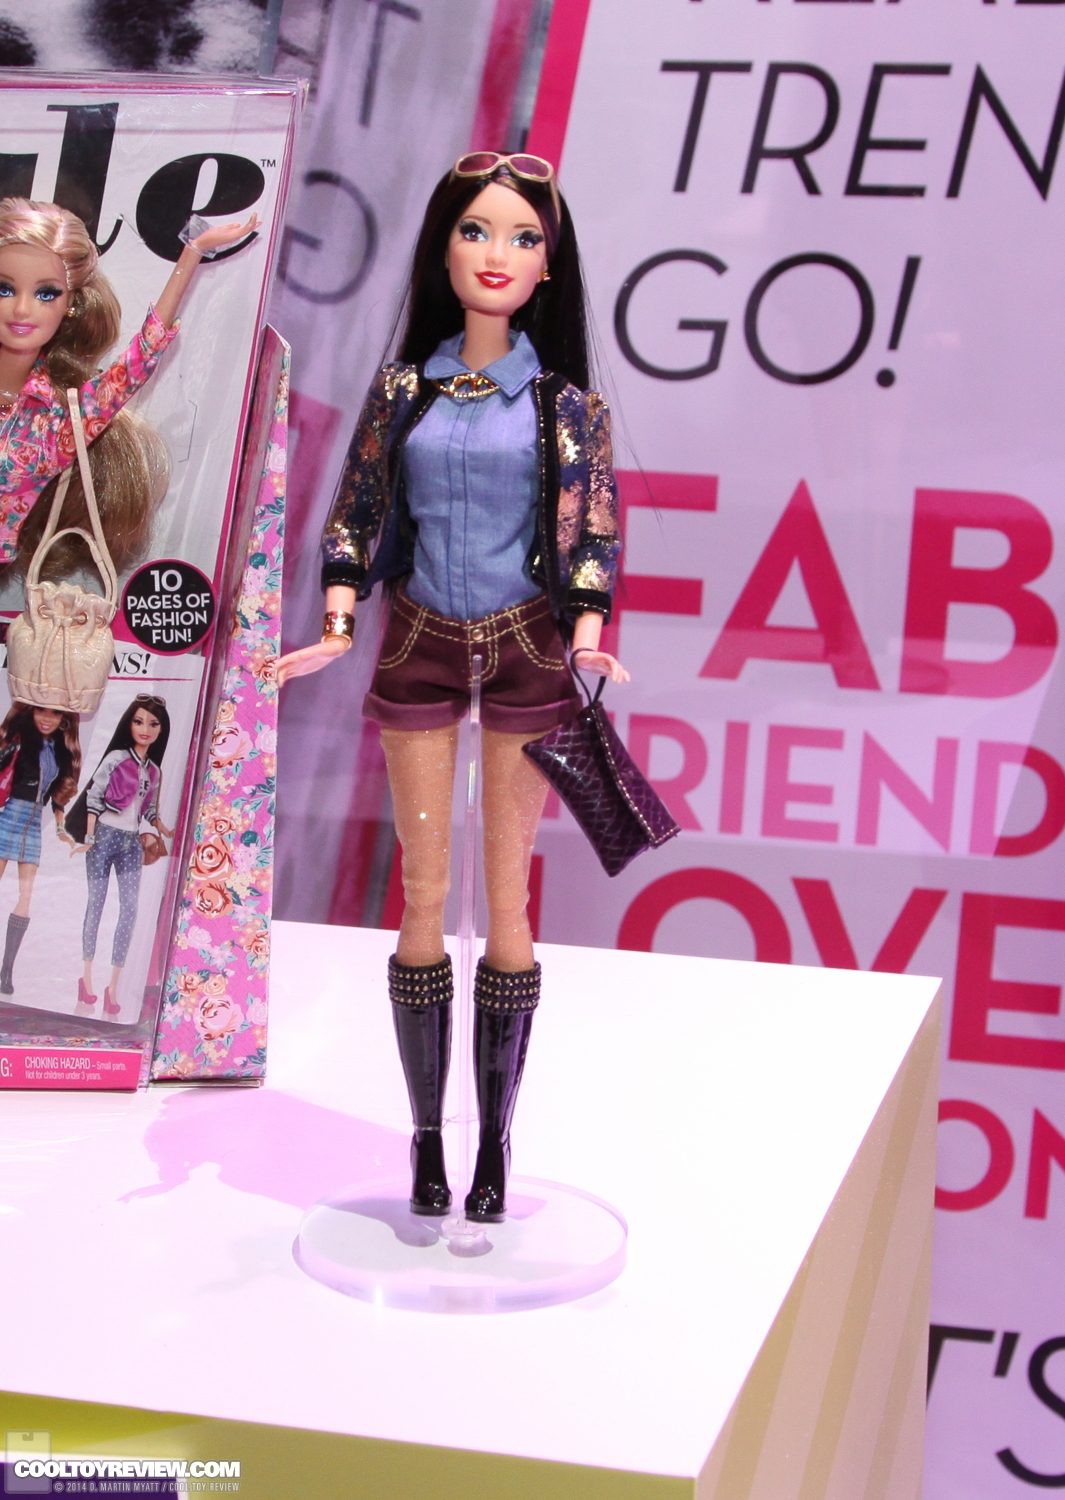 Toy-Fair-2014-Mattel-Showroom-138.jpg